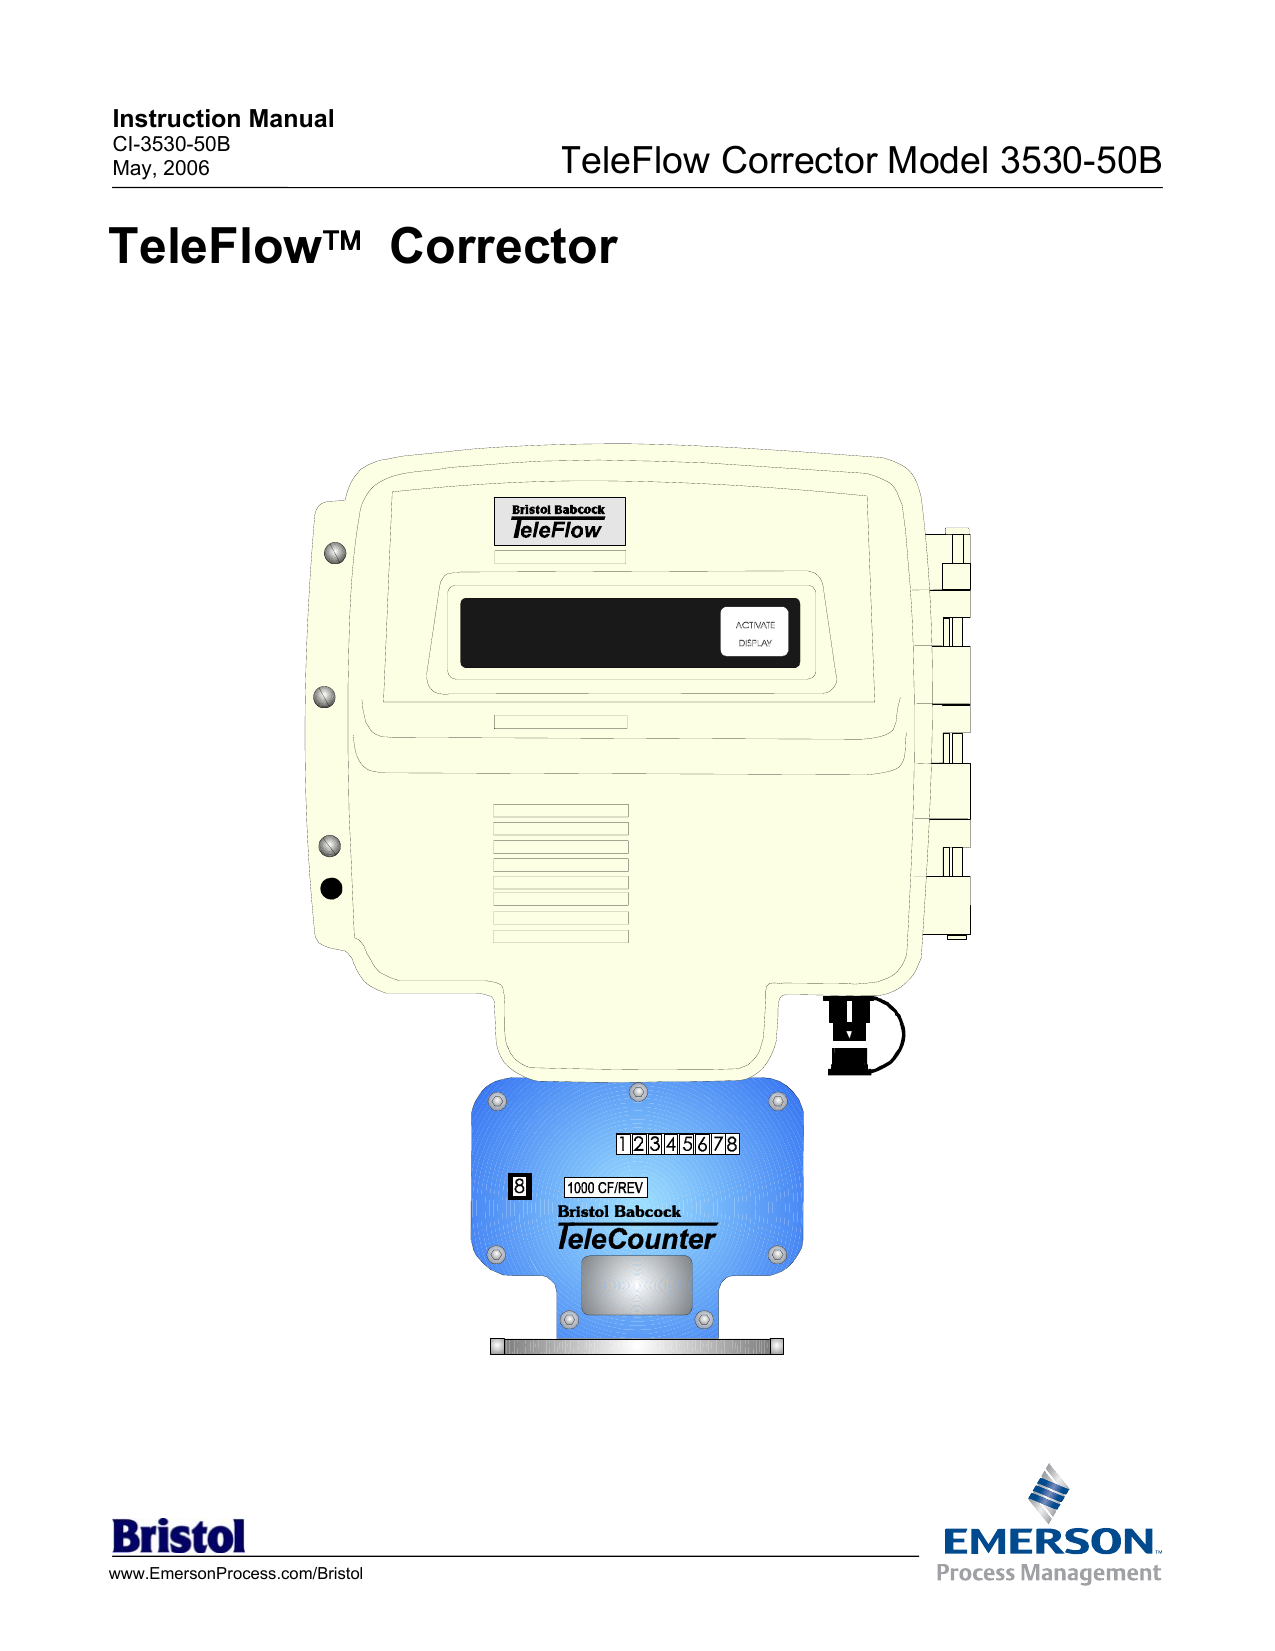 Bristol 9600bps PSTN Modem for TeleFlow Series (3530-xx-x)